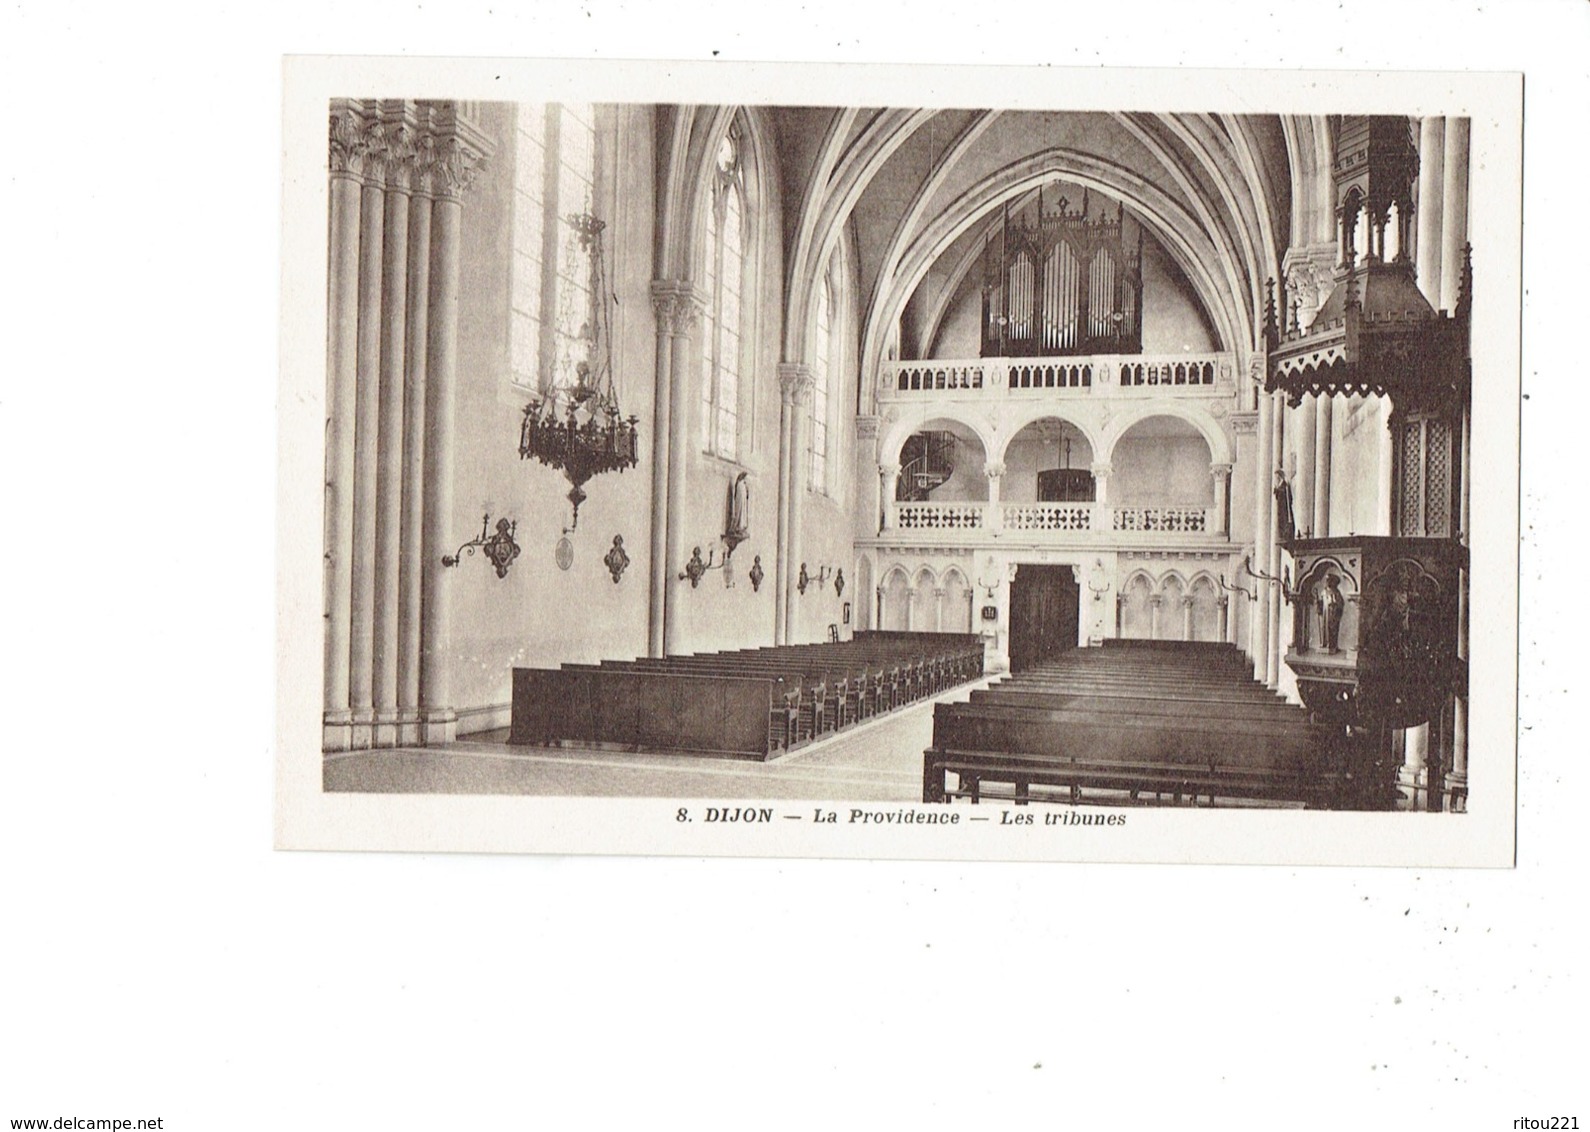 Cpa 21 - DIJON - LA PROVIDENCE . Les Tribunes - Orgue Orgues Orgel Organ - N°8 - Statue - Dijon